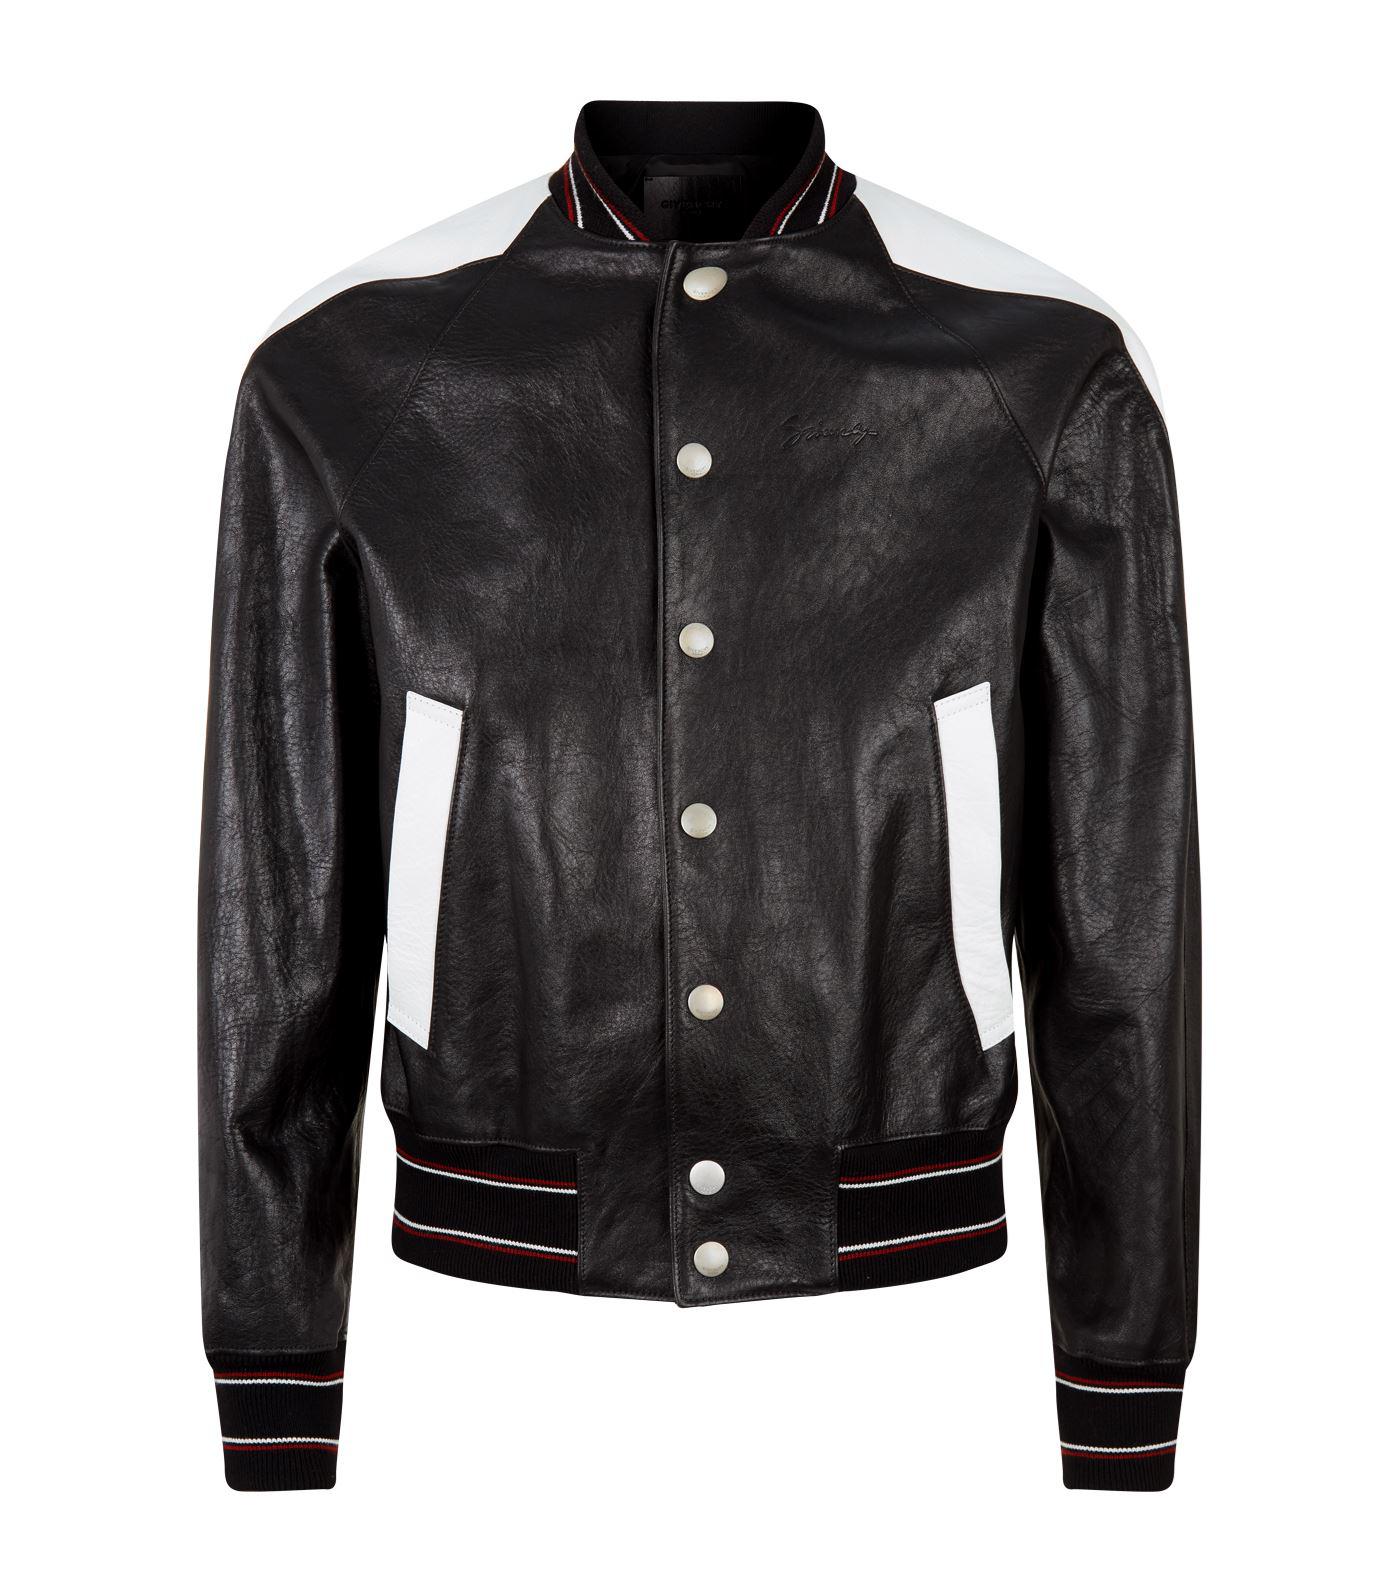 Givenchy Leather Varsity Bomber Jacket in Black for Men - Lyst